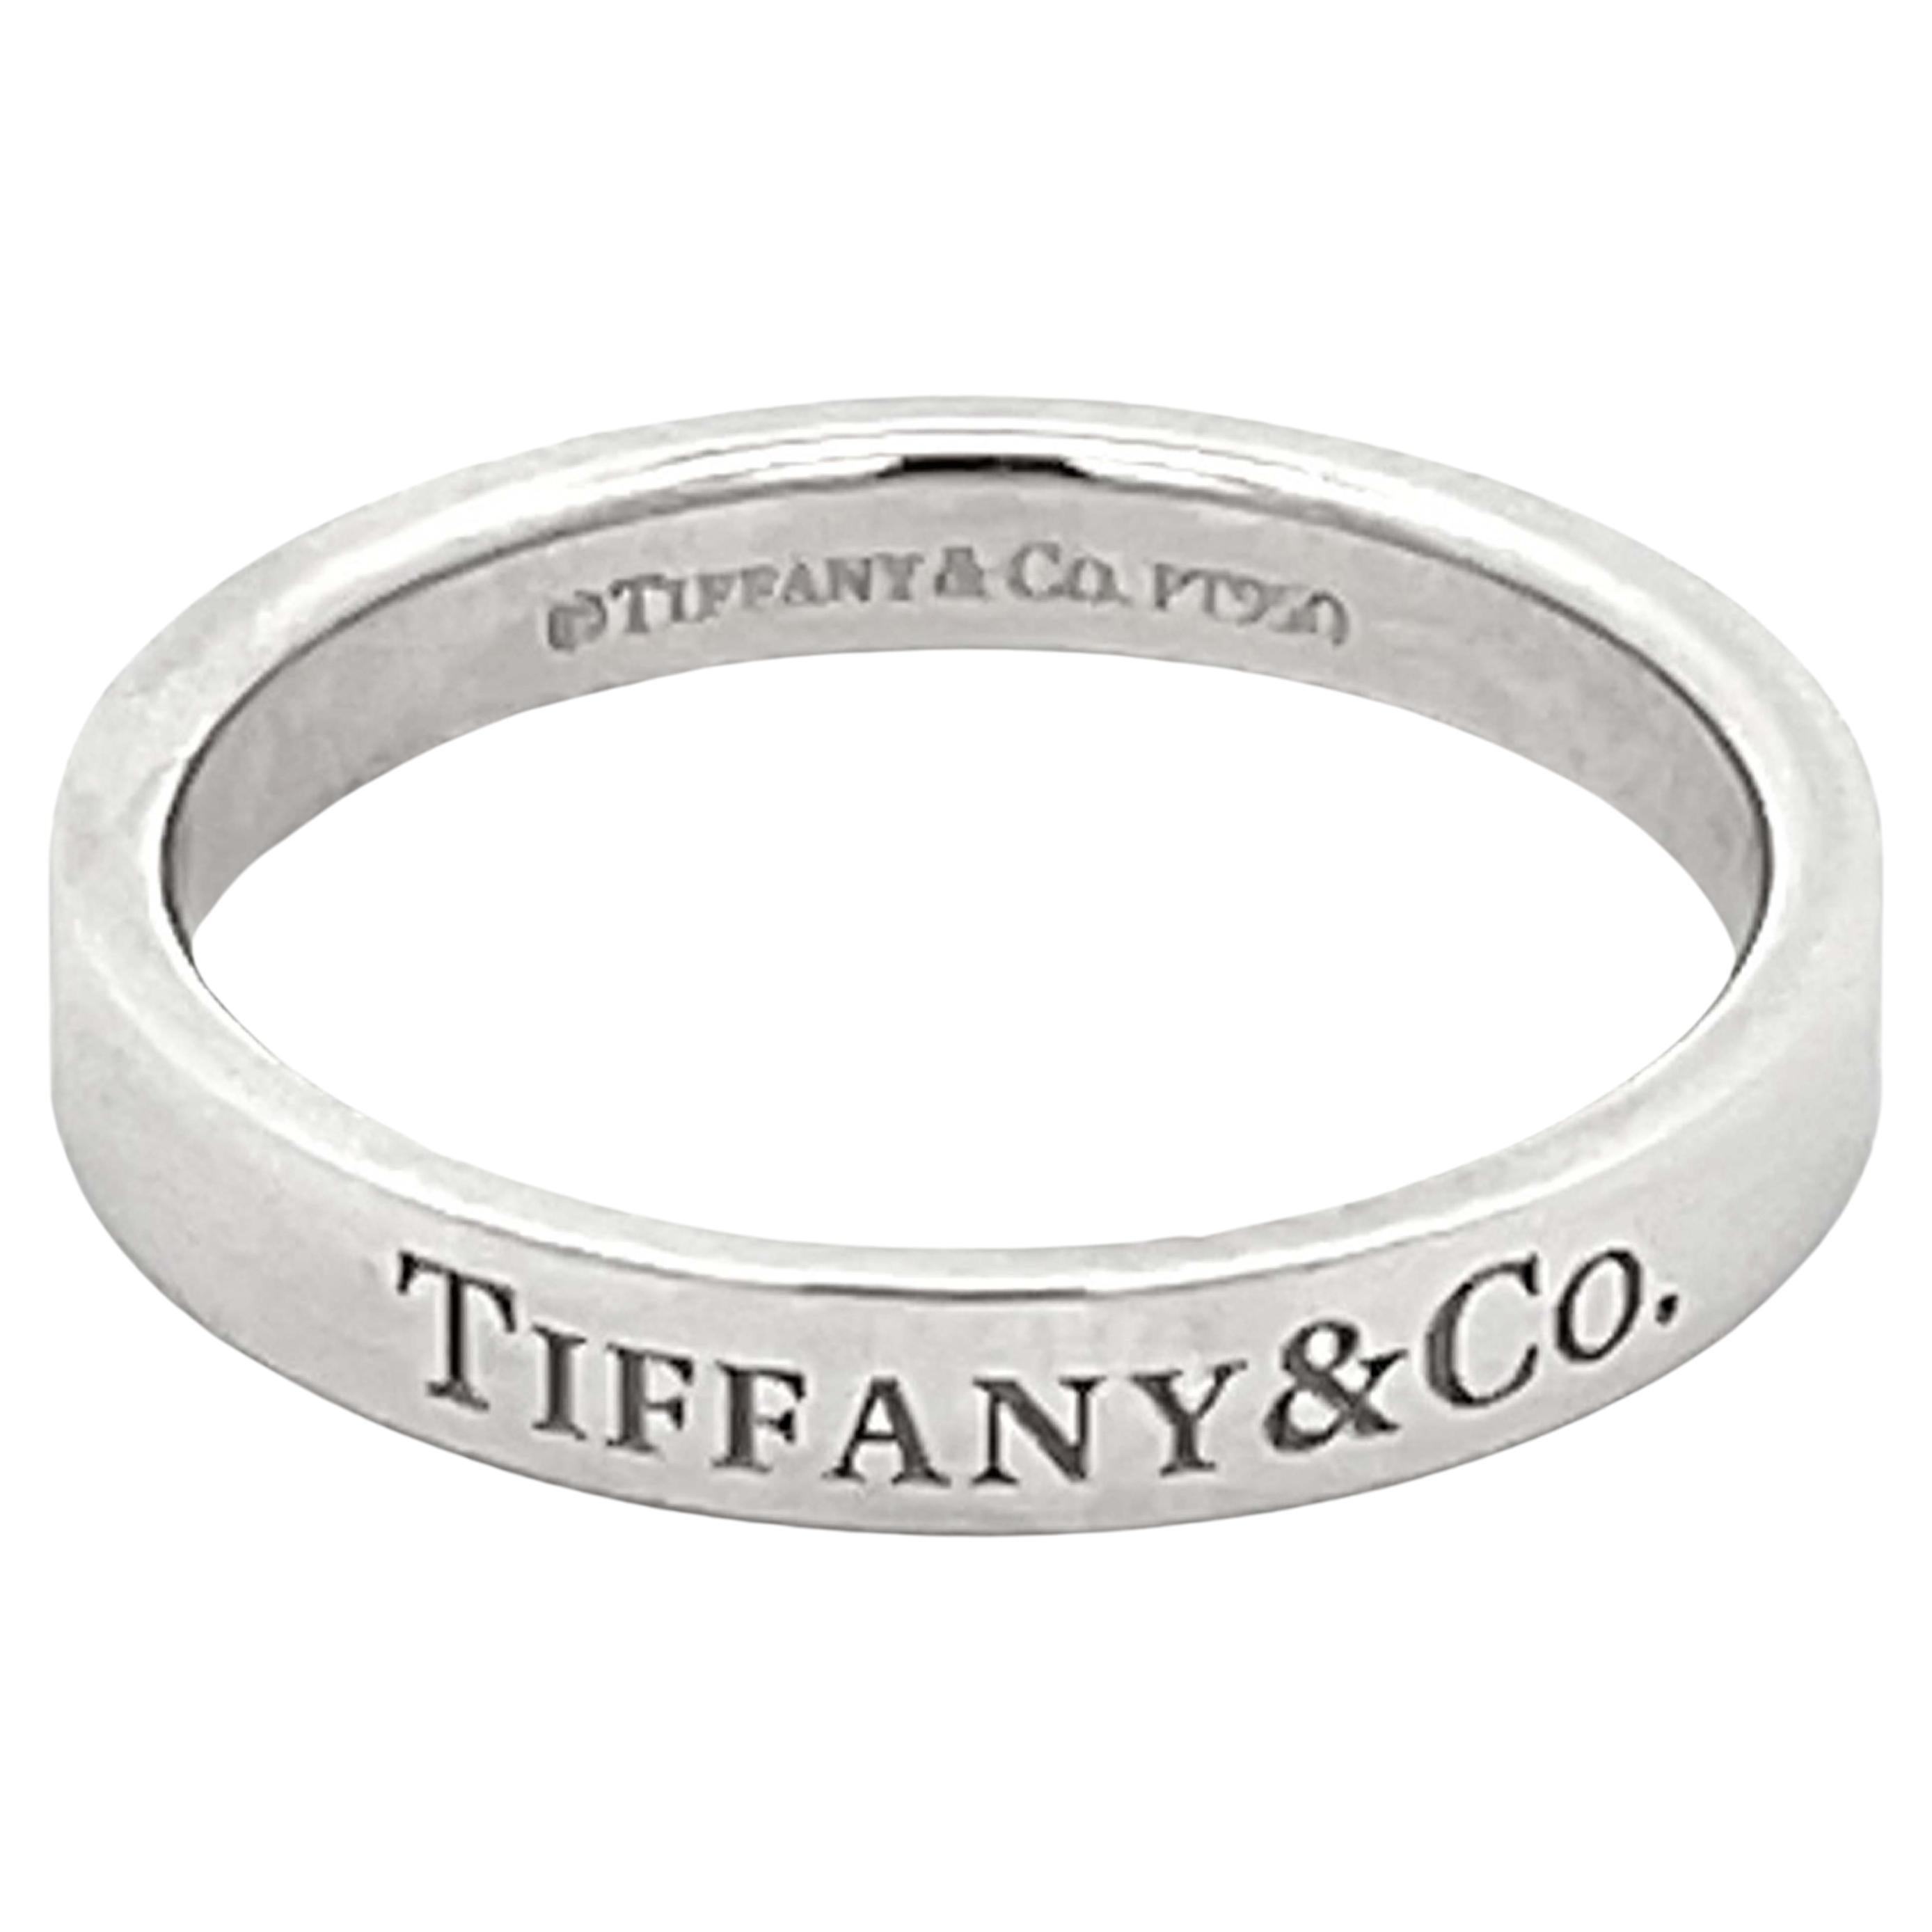 Tiffany & Co. Verlobungsring aus Platin mit 3 mm breitem Rand